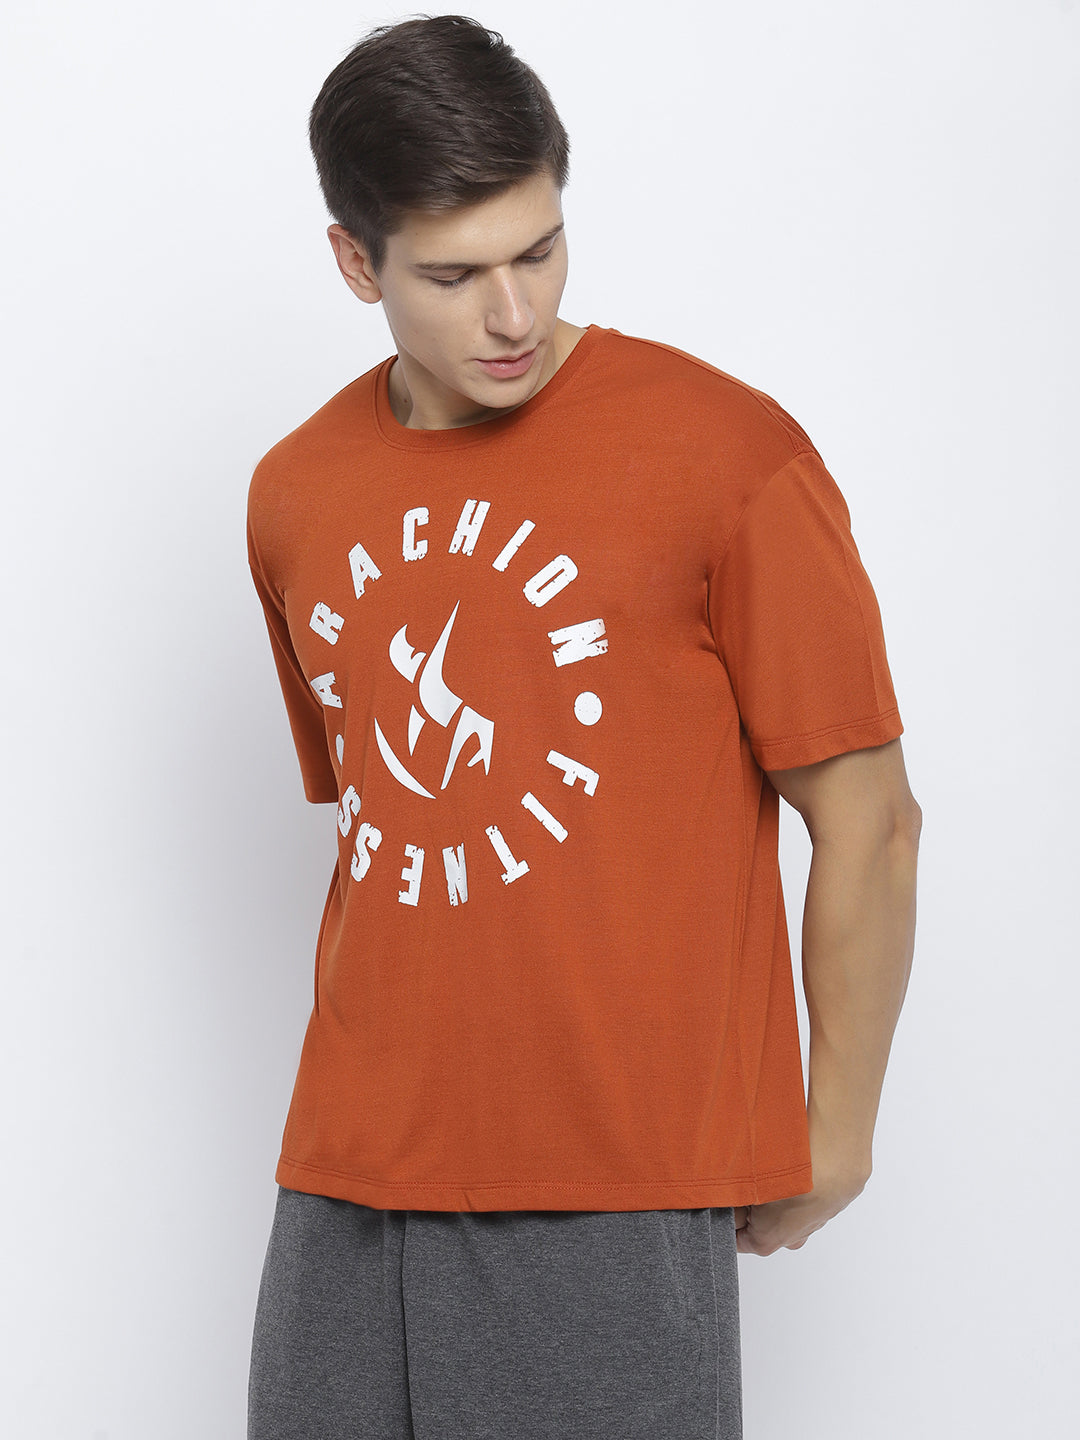 Arachion Censor Oversized T-shirt | Rust Orange